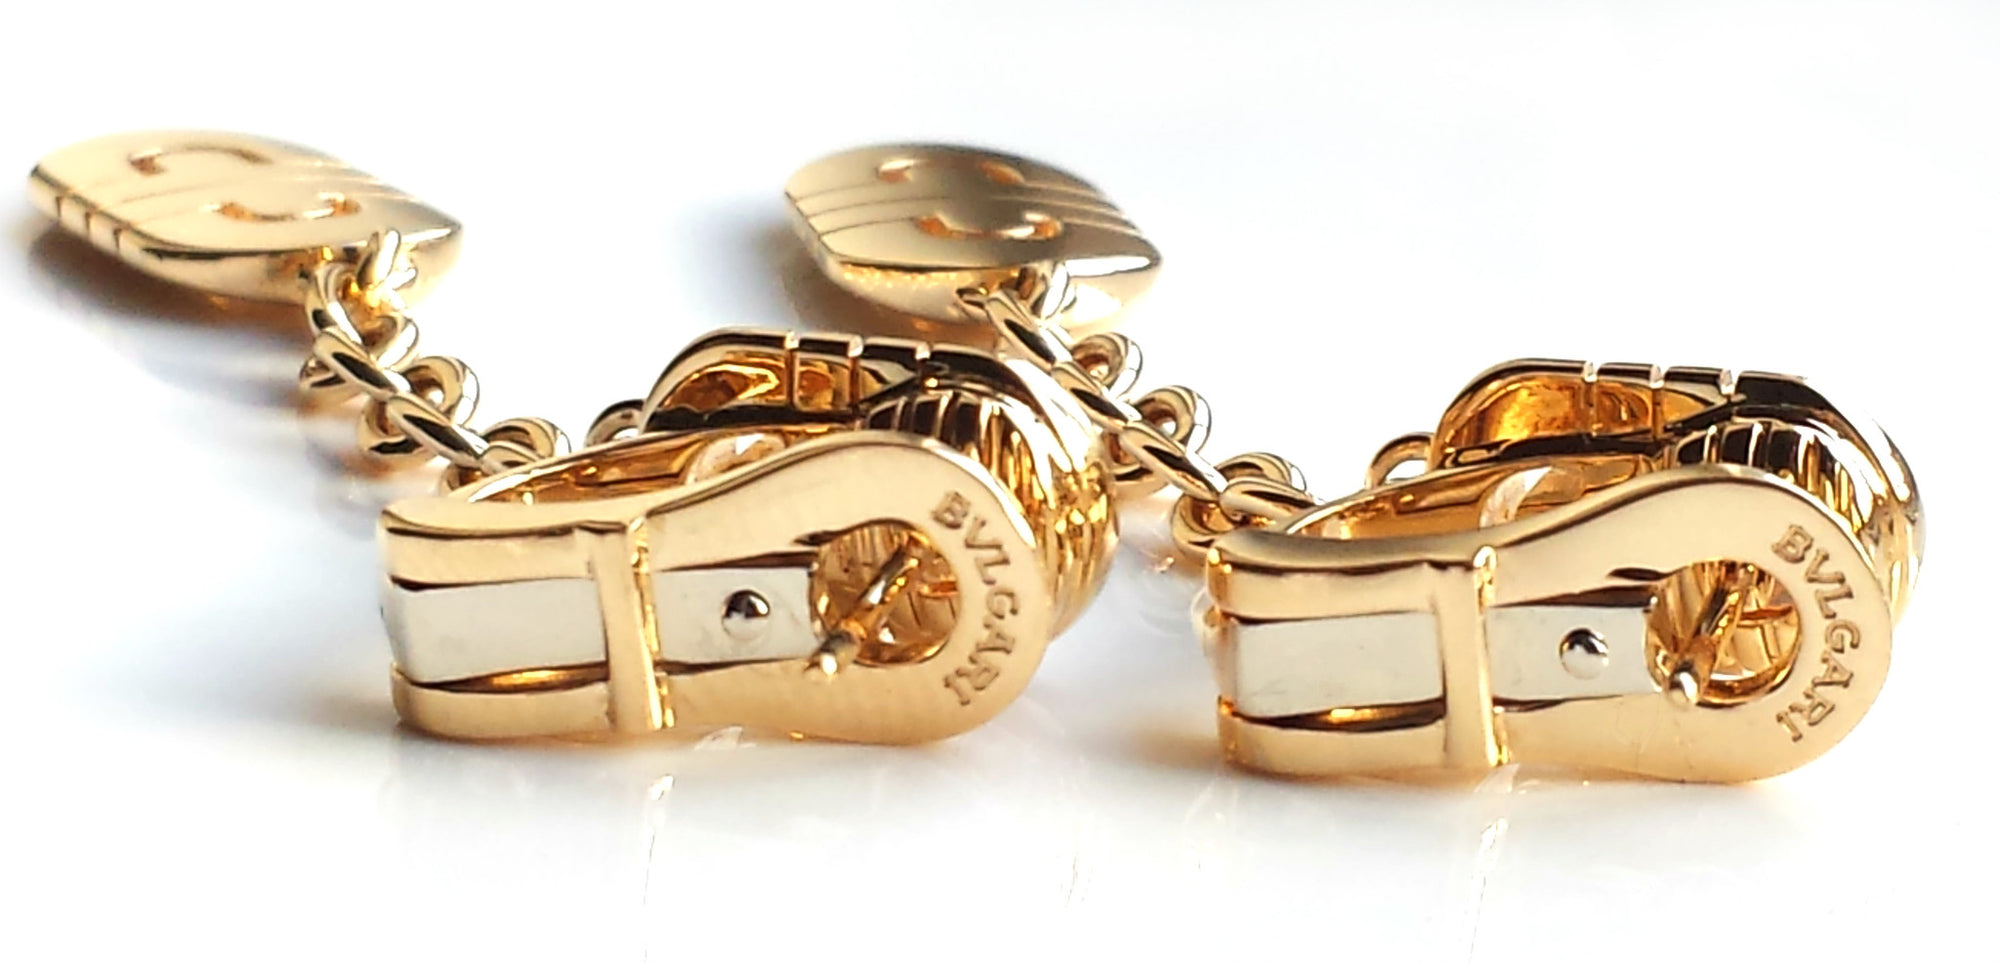 Bulgari / Bvlgari Parentesi Drop Earrings in 18k Yellow Gold – as new